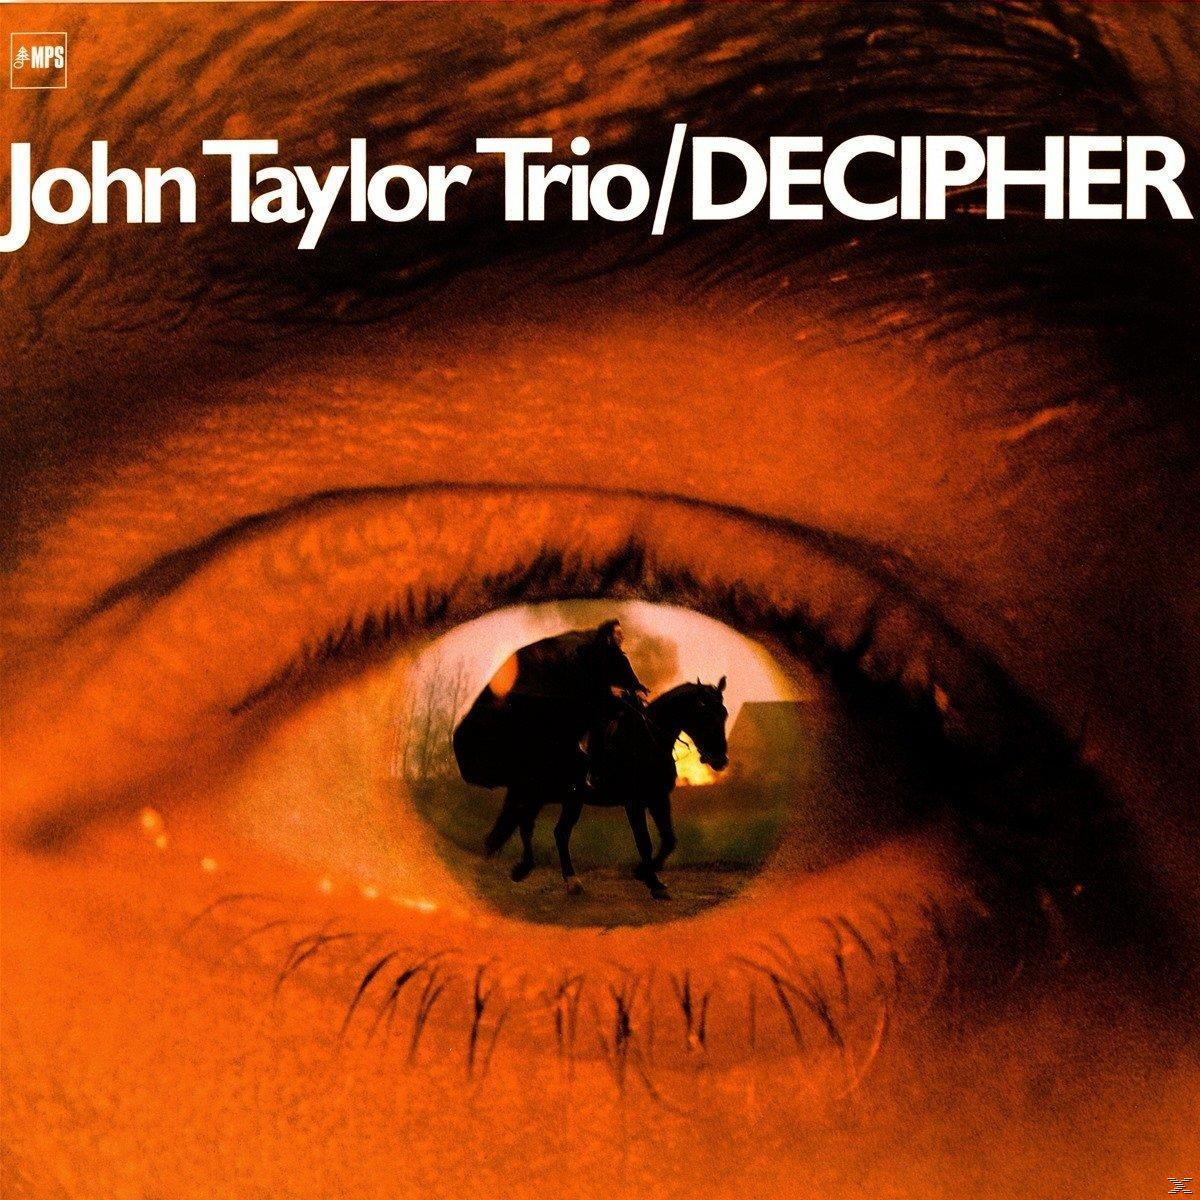 (Vinyl) Trio Decipher - - John Taylor